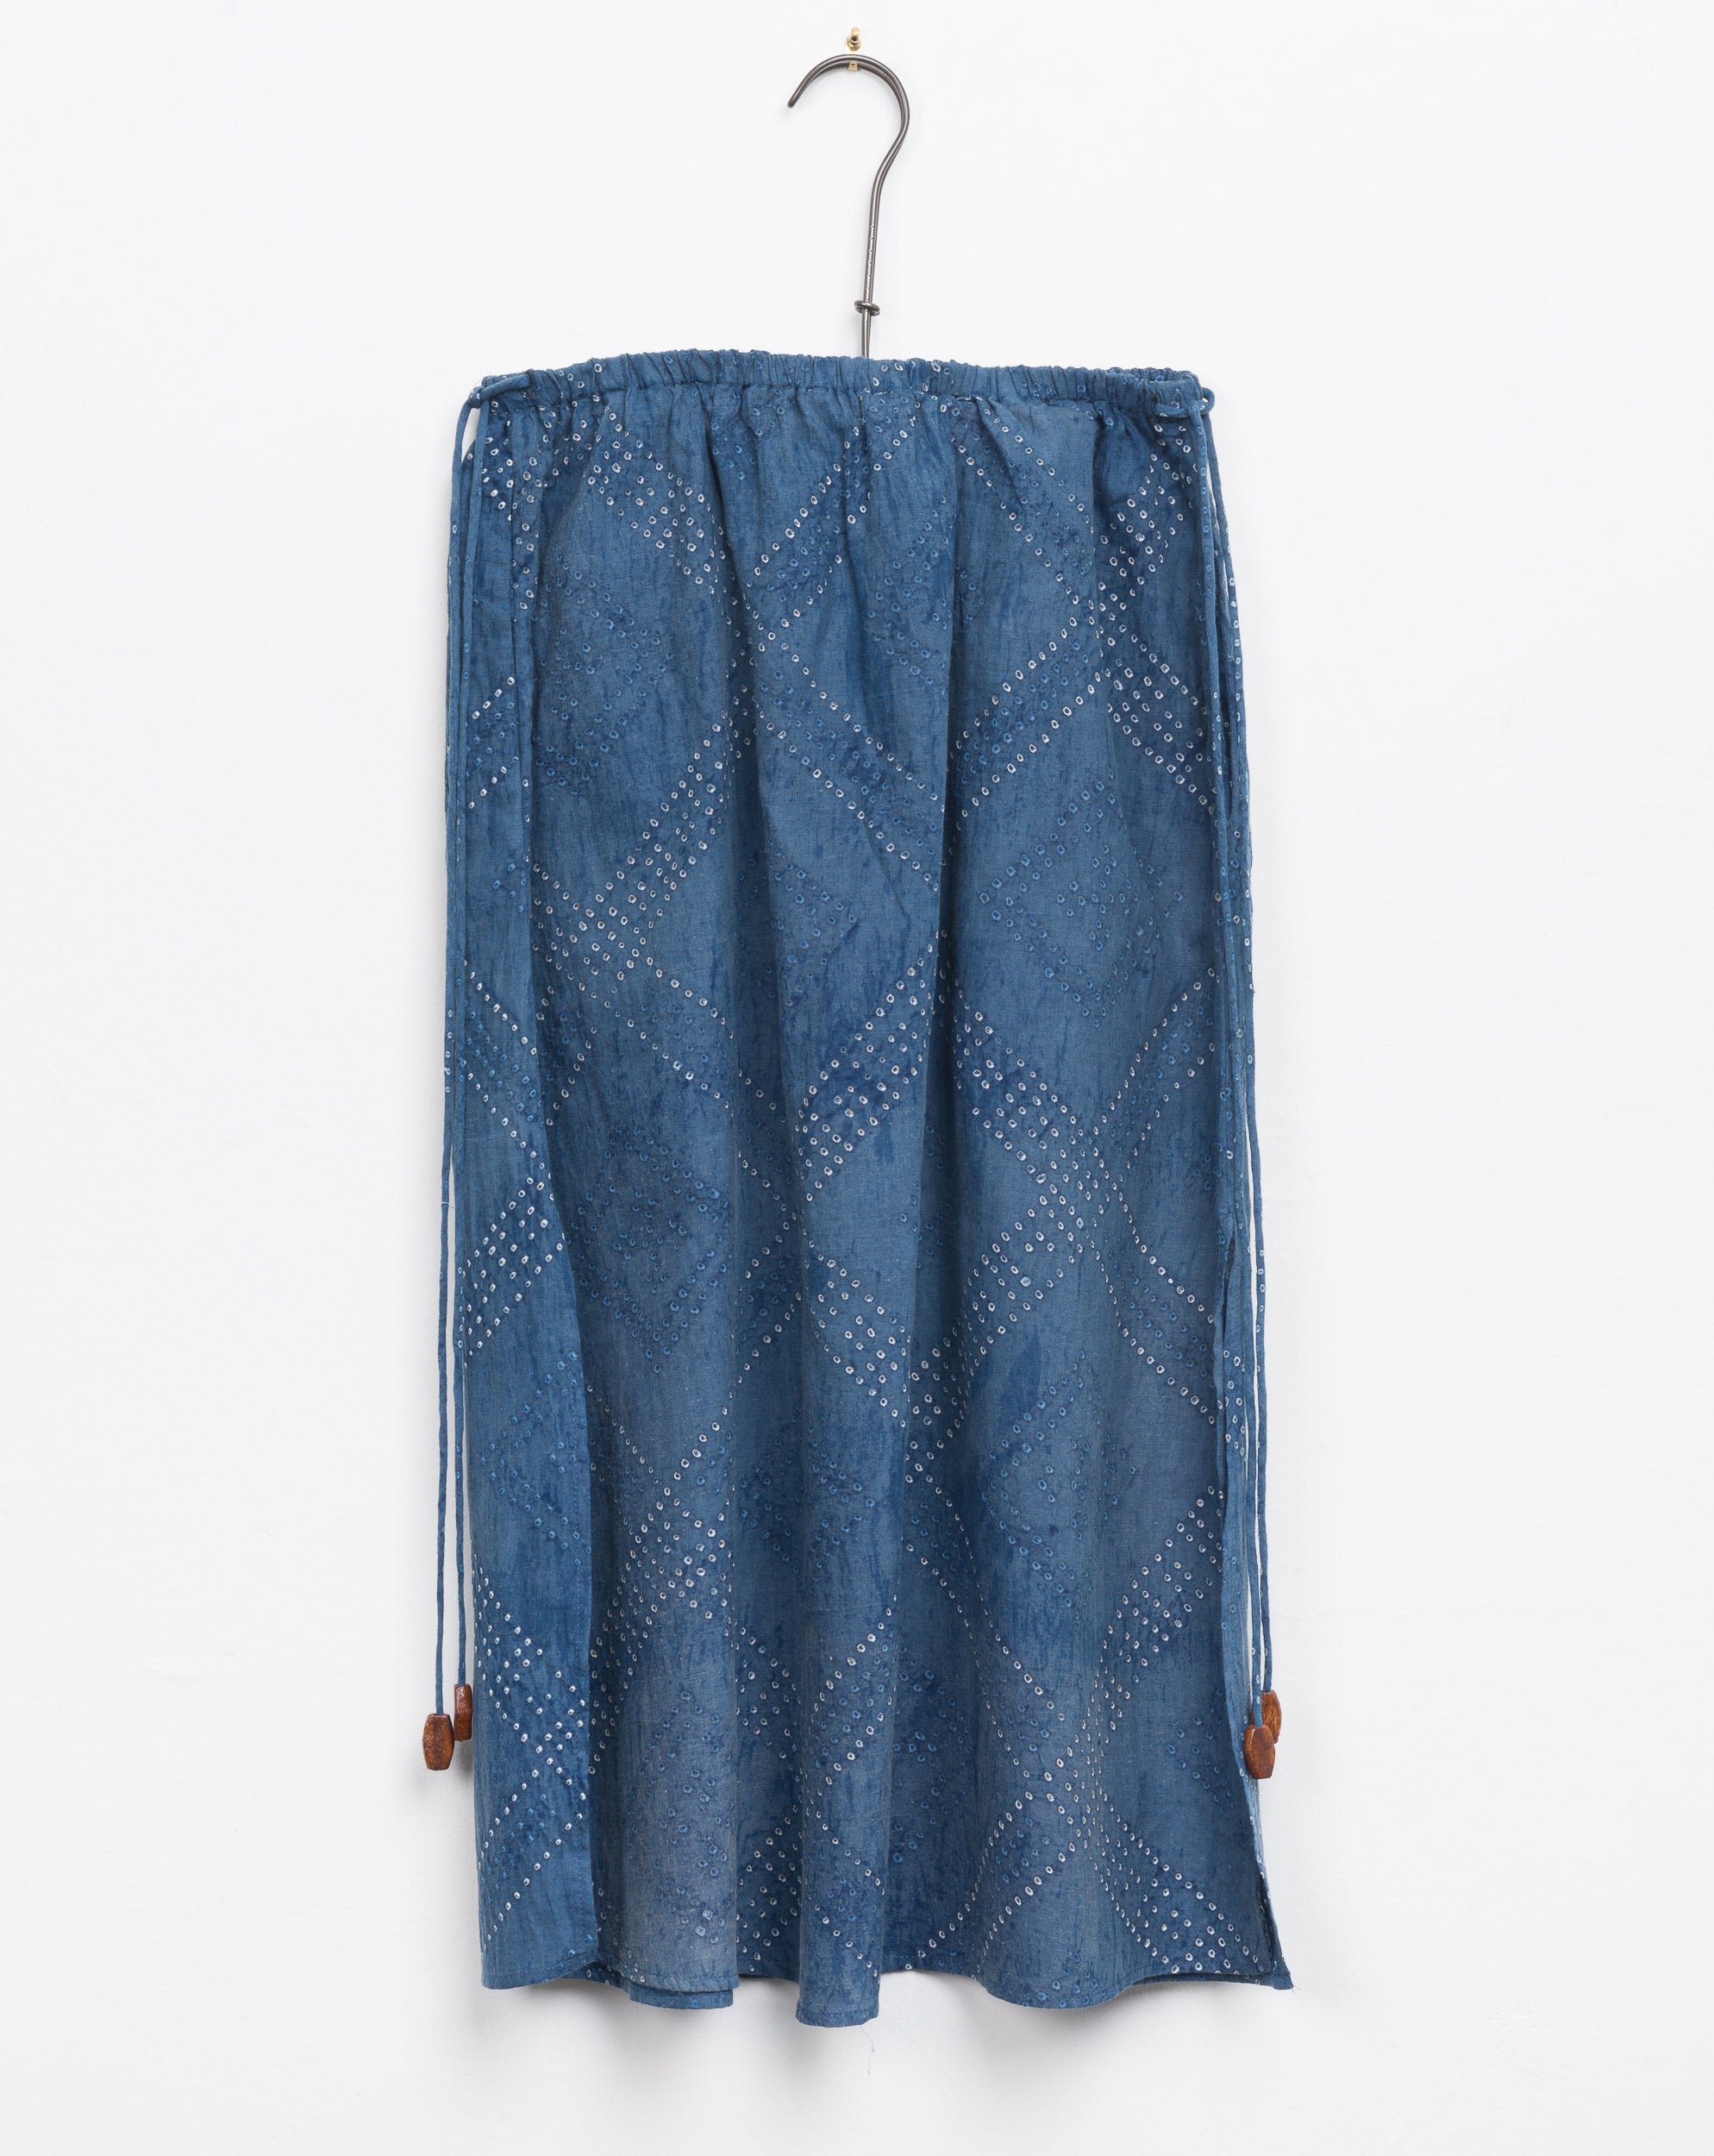 Kavya Skirt in Indigo Tile Bandhani